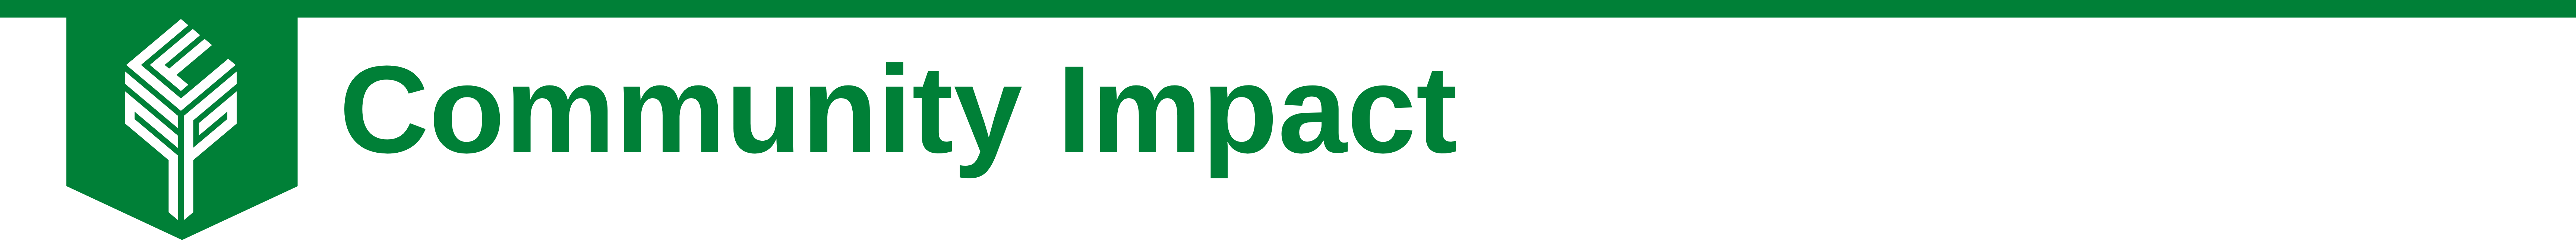 Community_Impact